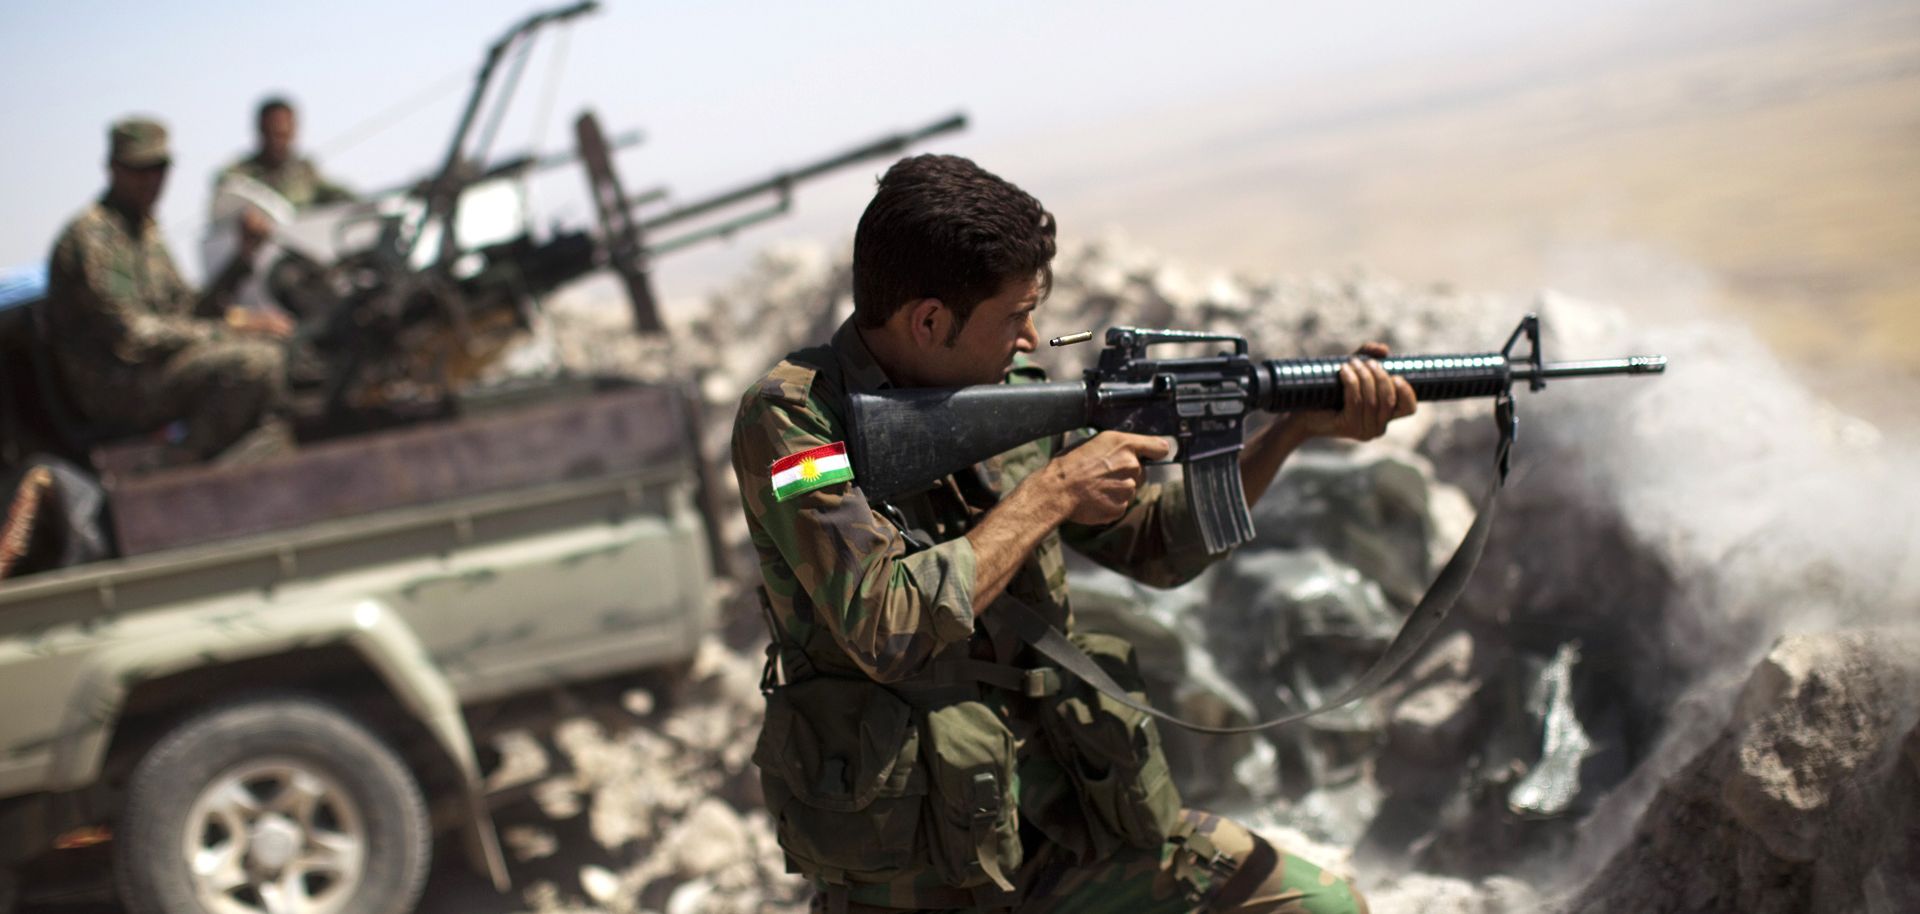 Though a limited force, the Kurdish peshmerga could prove critical against Islamic State